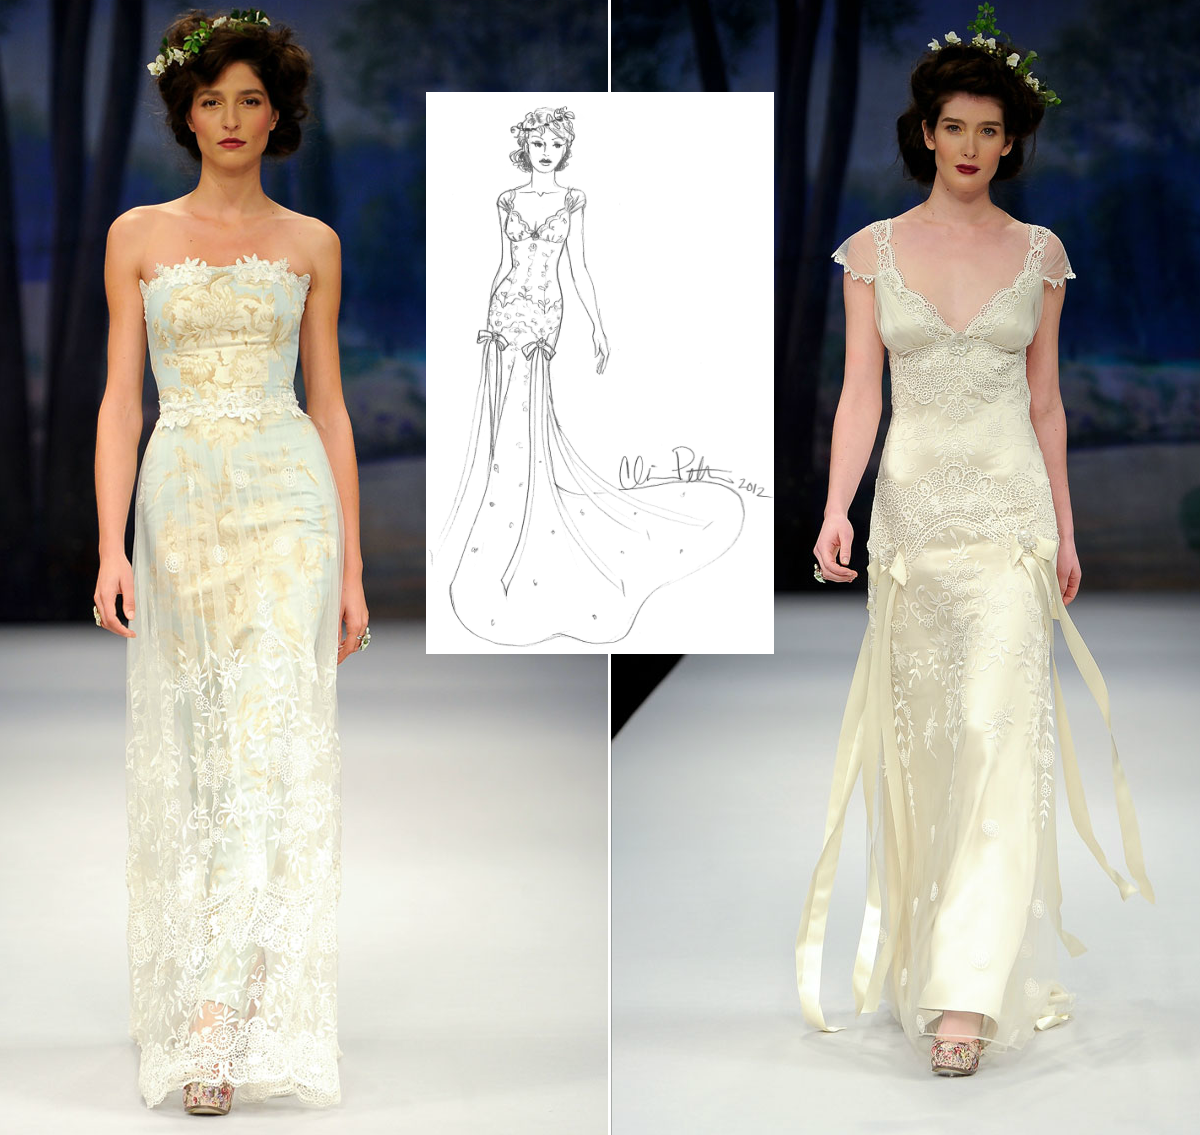 Anne Hathaway Wedding Dress Sketch